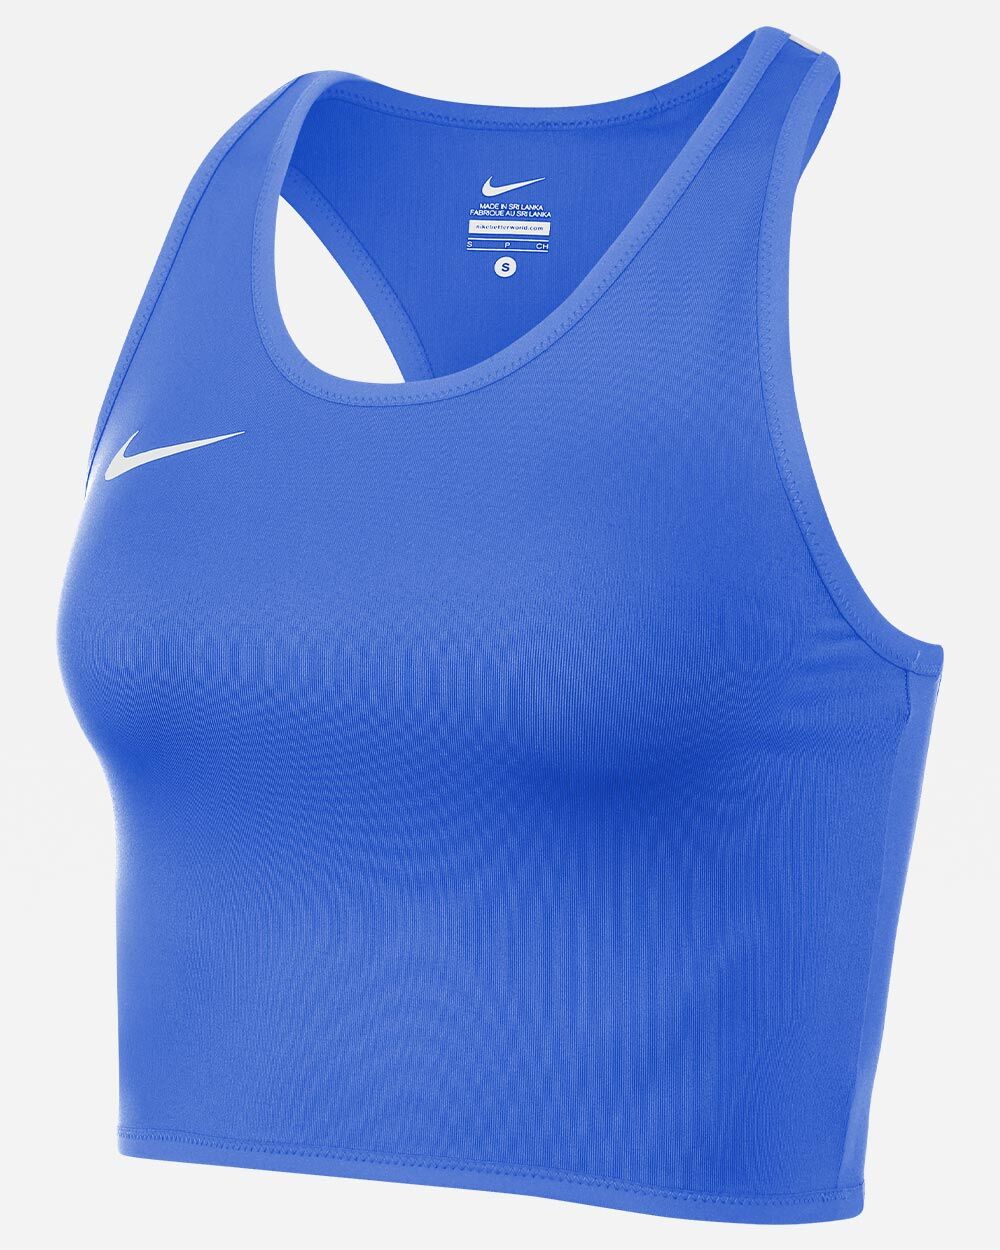 Camiseta sin mangas de running Nike Stock Azul Real Mujeres - NT0312-463